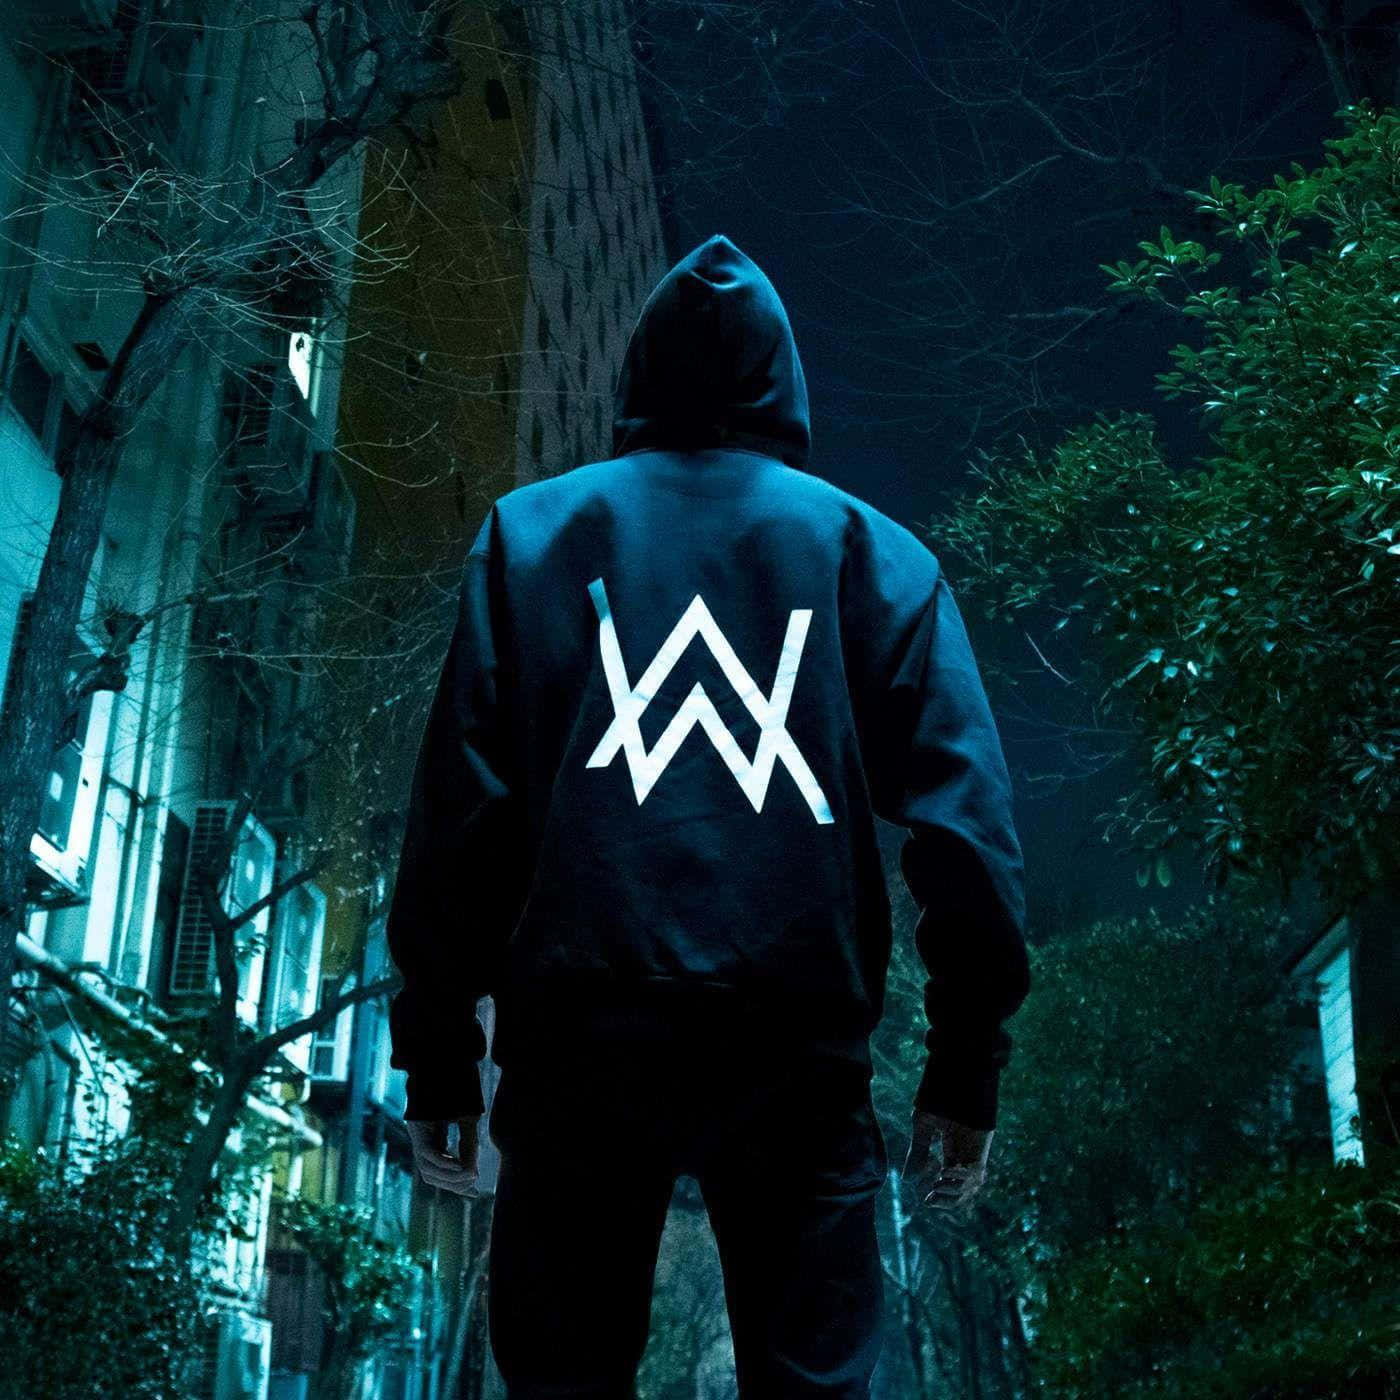 Alan Walker posing in his signature hoodie and mask